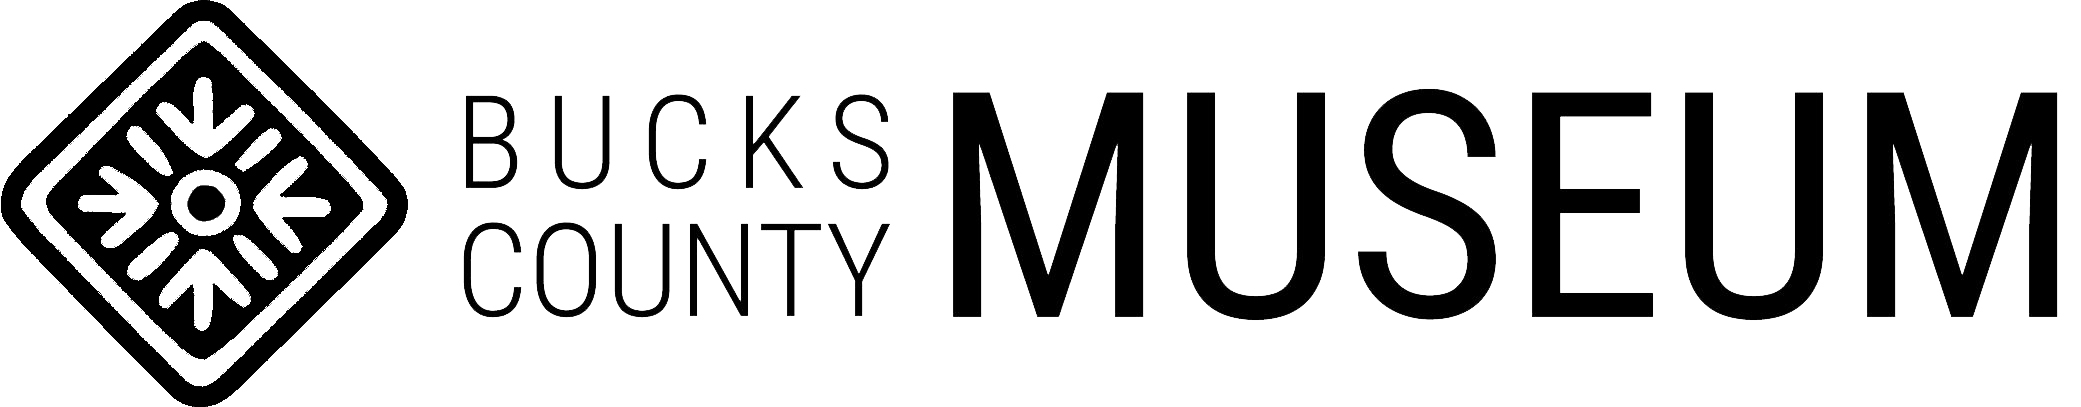 County Museum black logo 2015.jpg